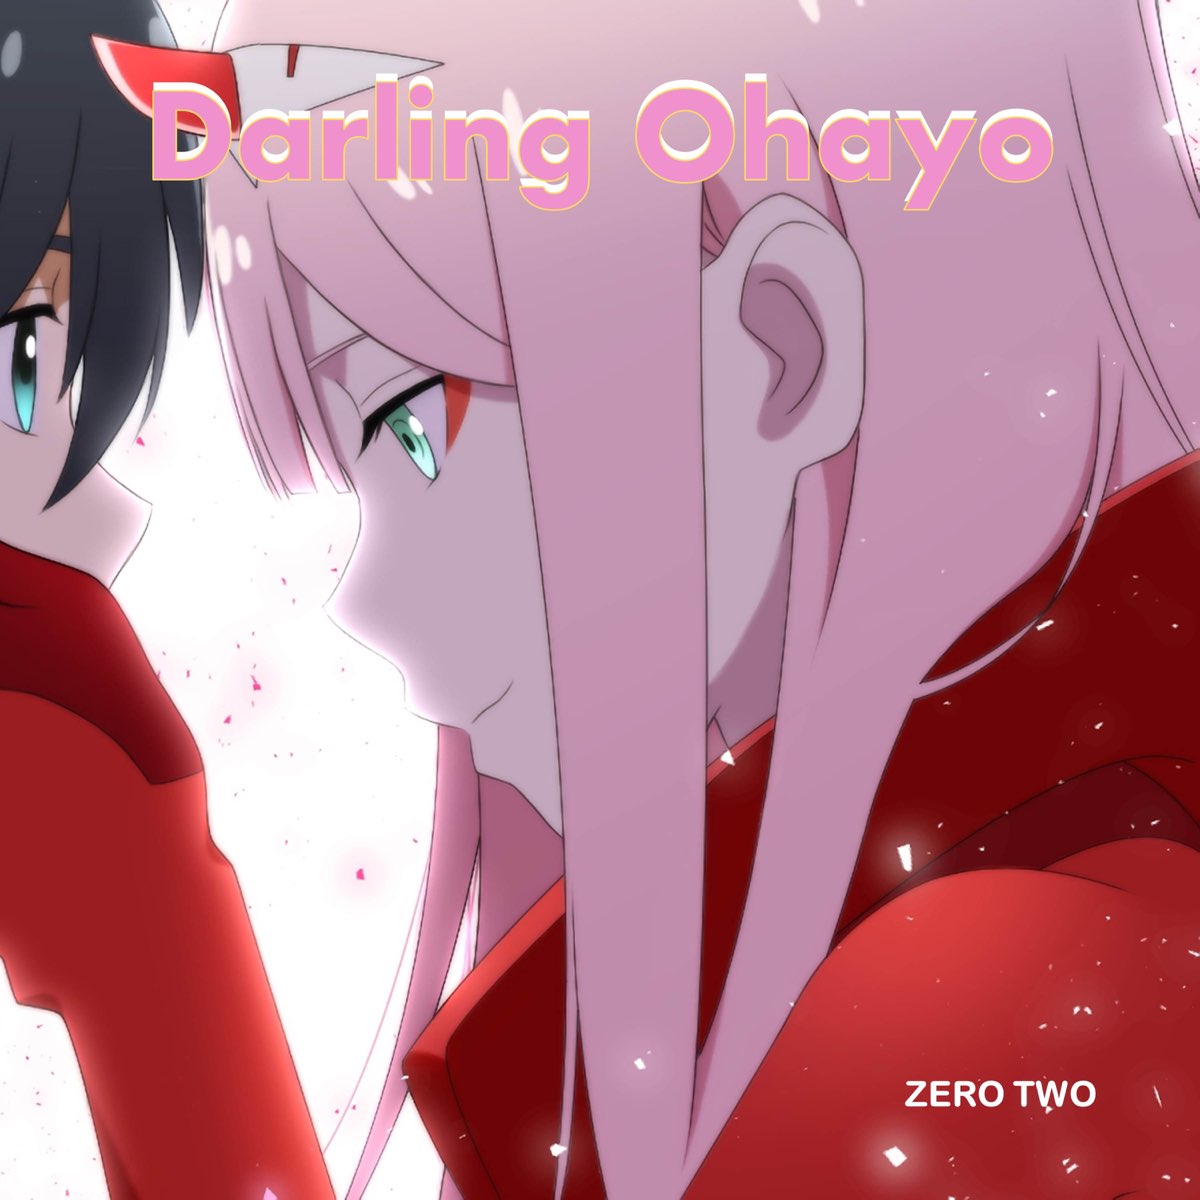 Darling Ohayo - Single - Album by Zero Two - Apple Music